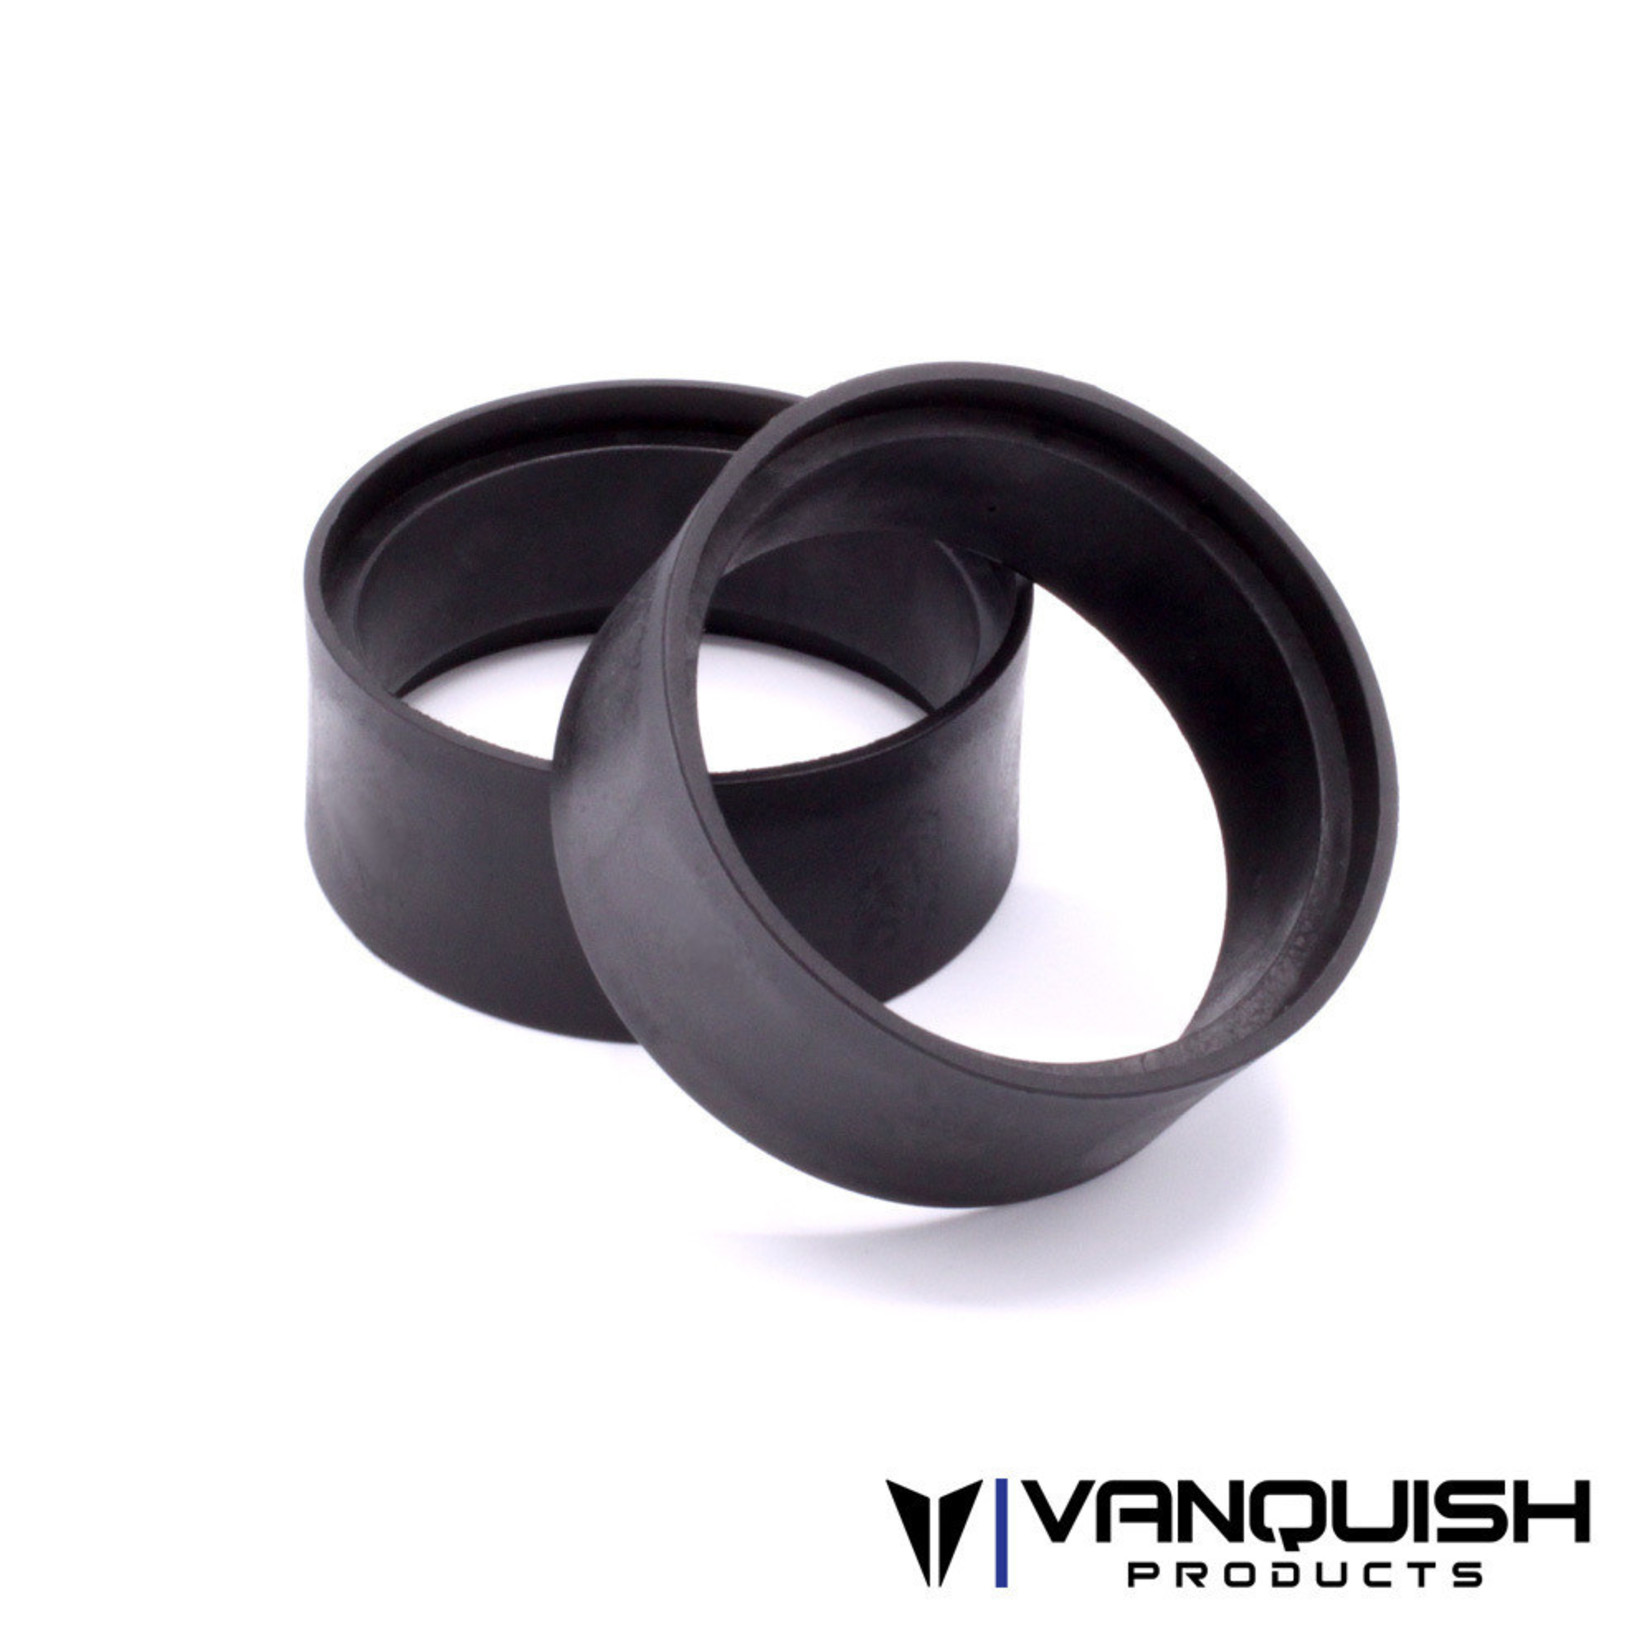 Vanquish Products Vanquish Products KMC 1.9 KM445 Impact Orange Anodized #VPS07806